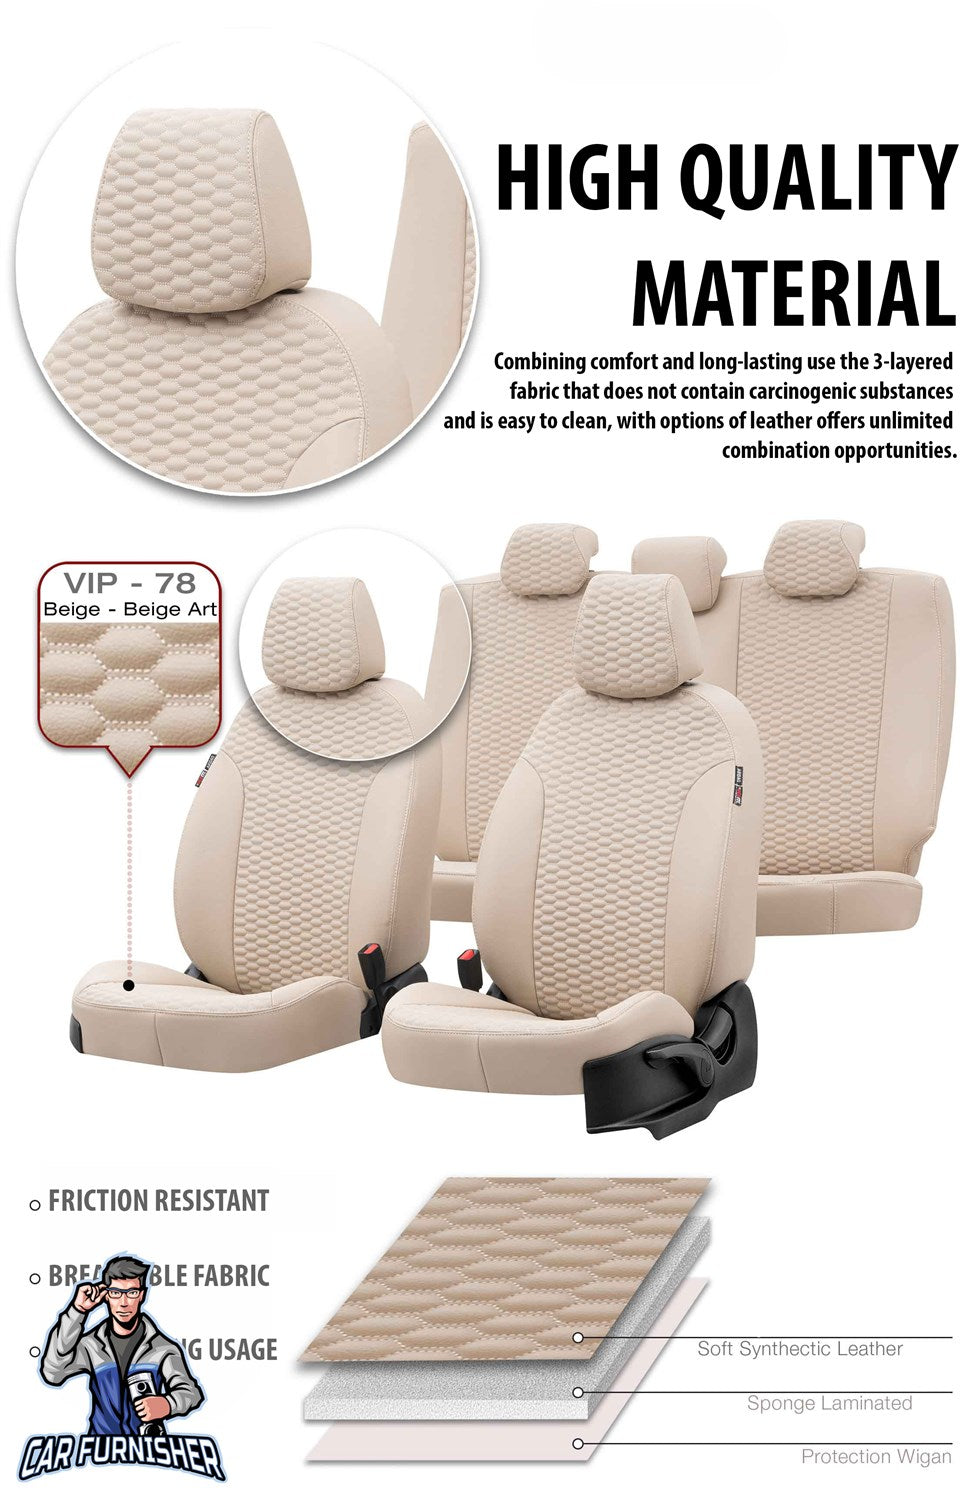 Daihatsu Terios Seat Covers Tokyo Leather Design Dark Gray Leather